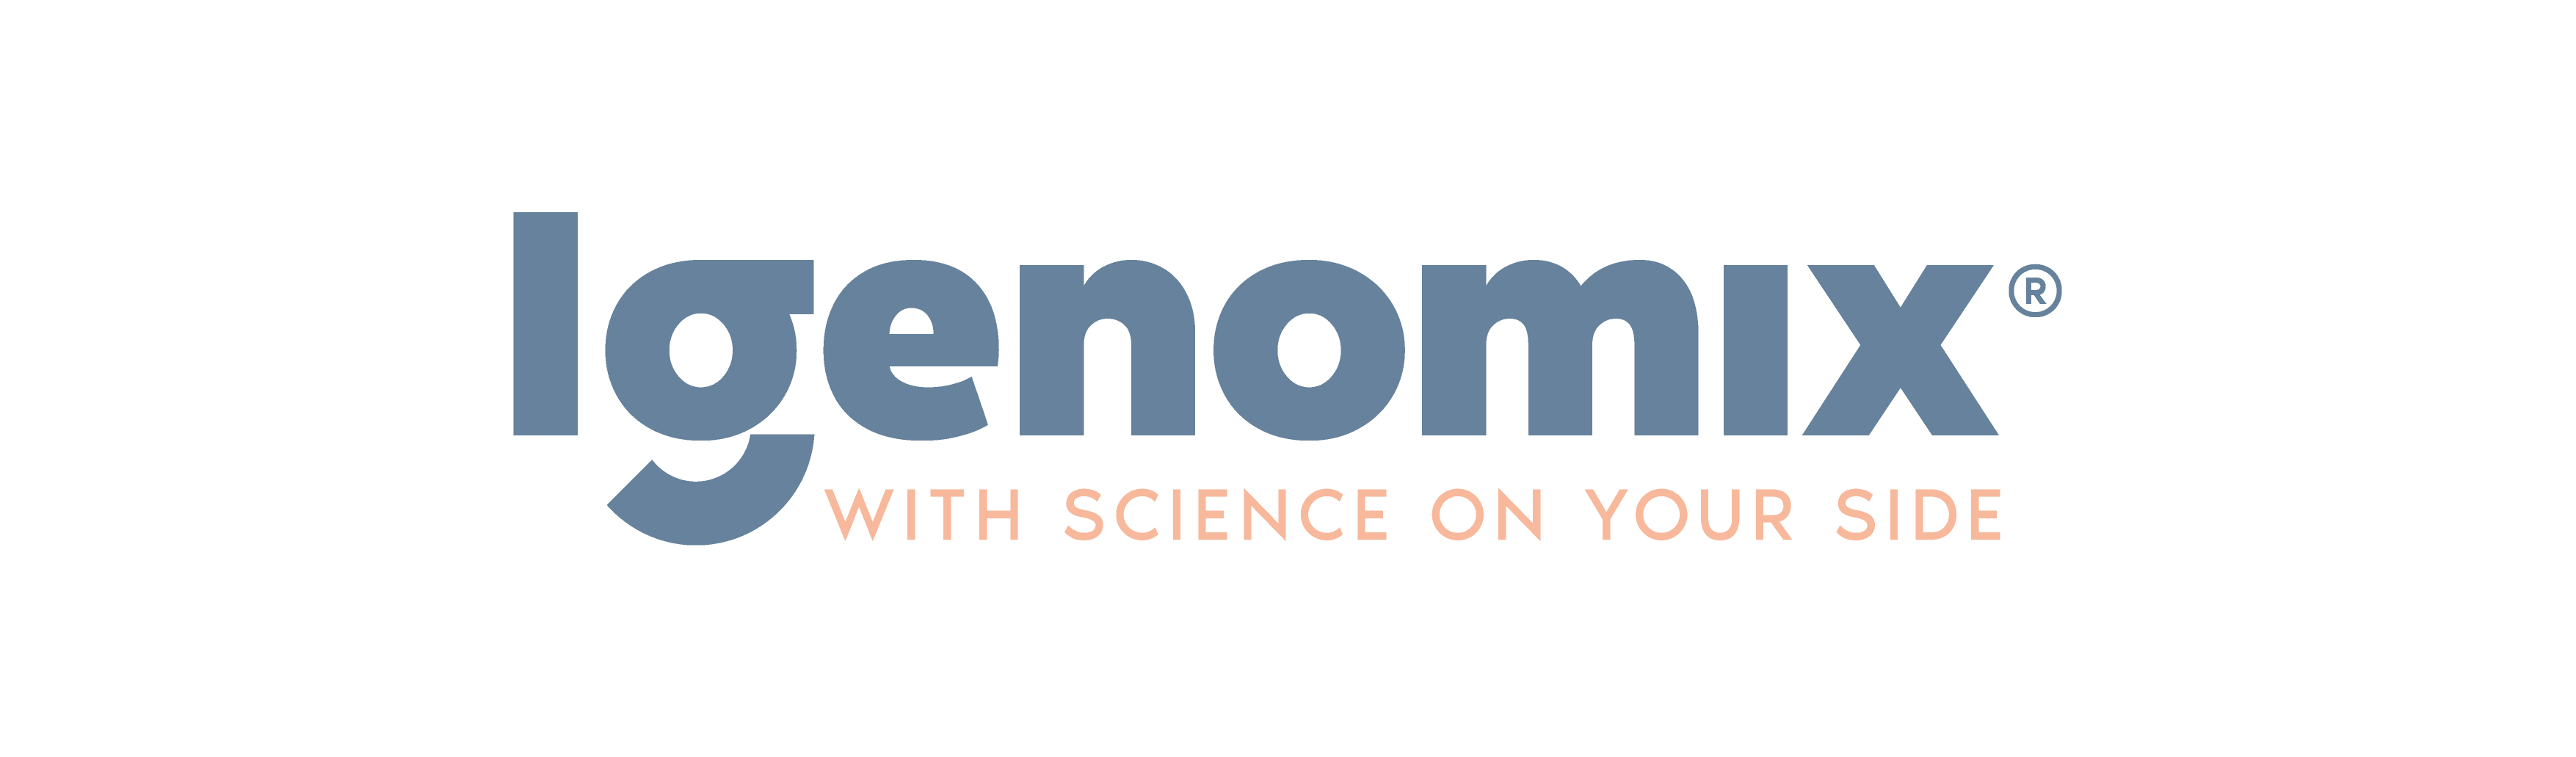 logo igenomix color